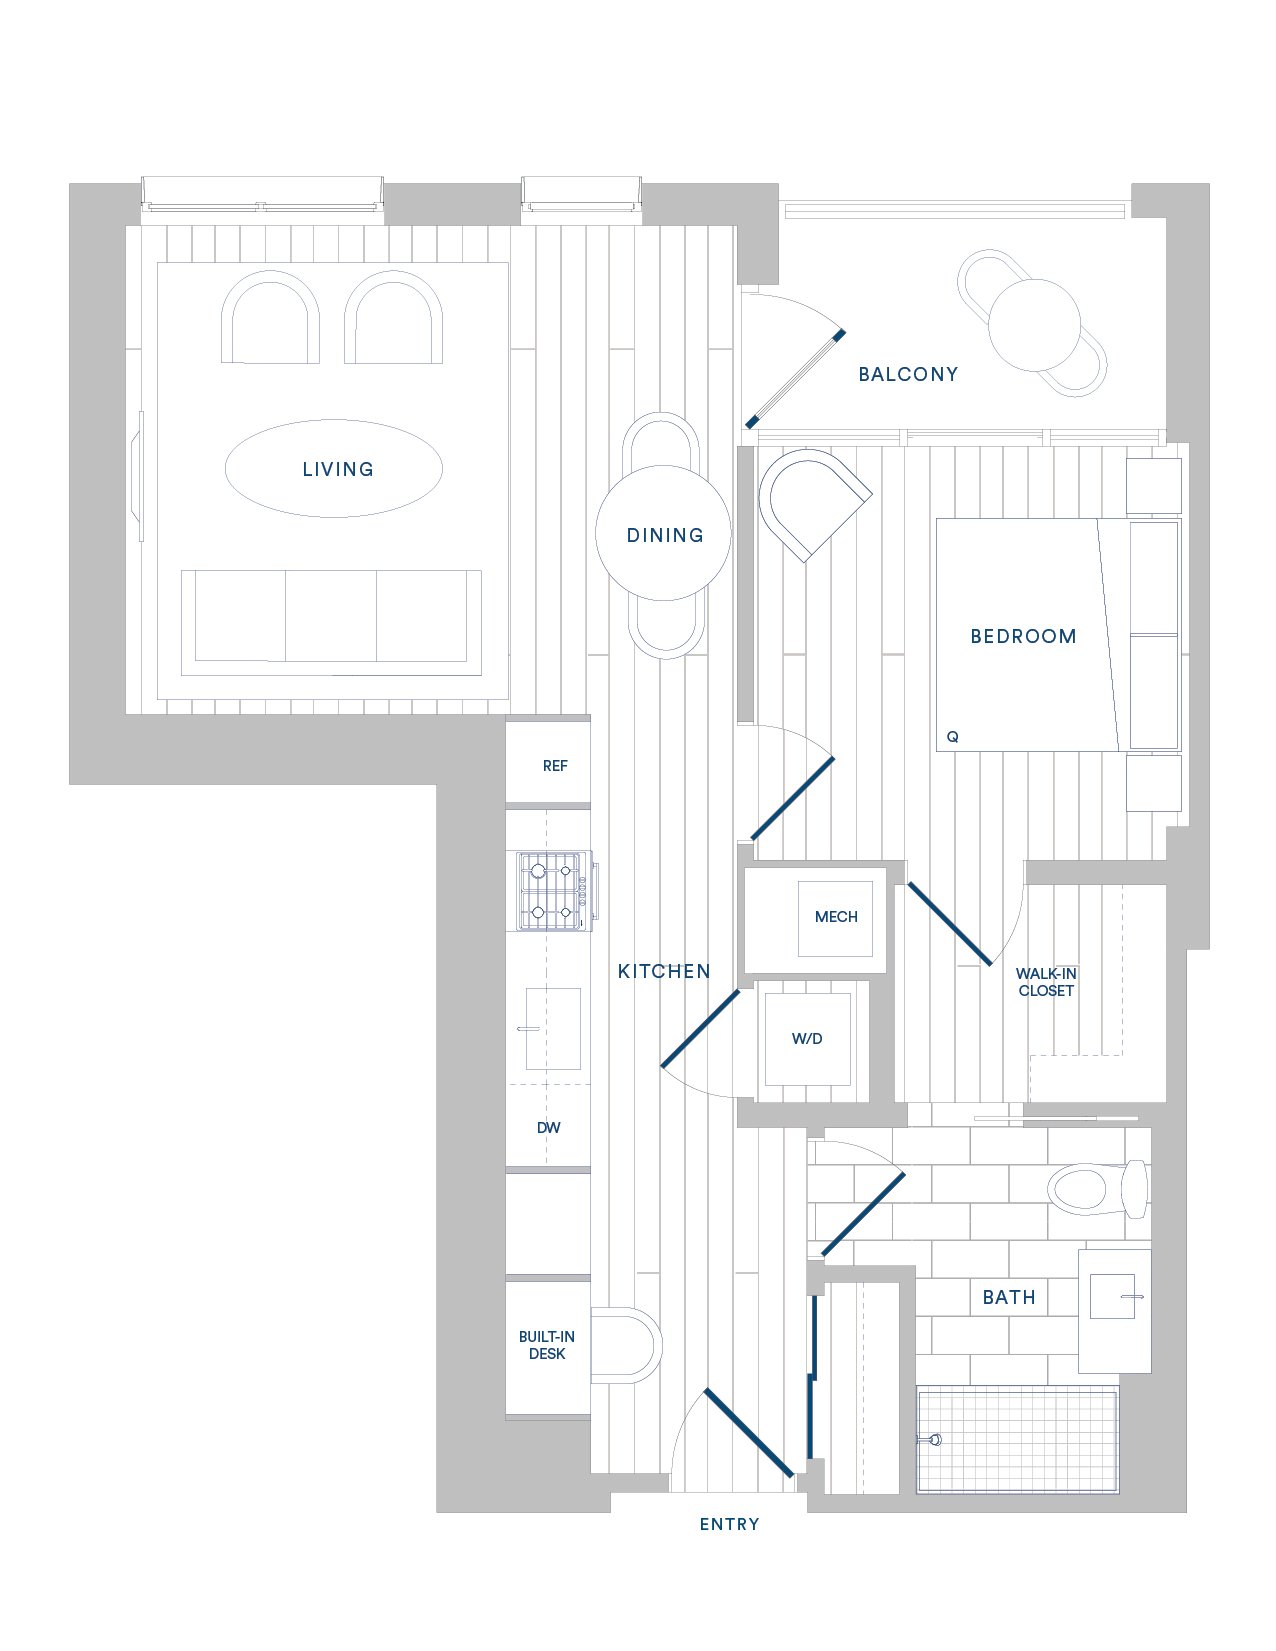 Floorplan for Apartment #906, 1 bedroom unit at Margarite